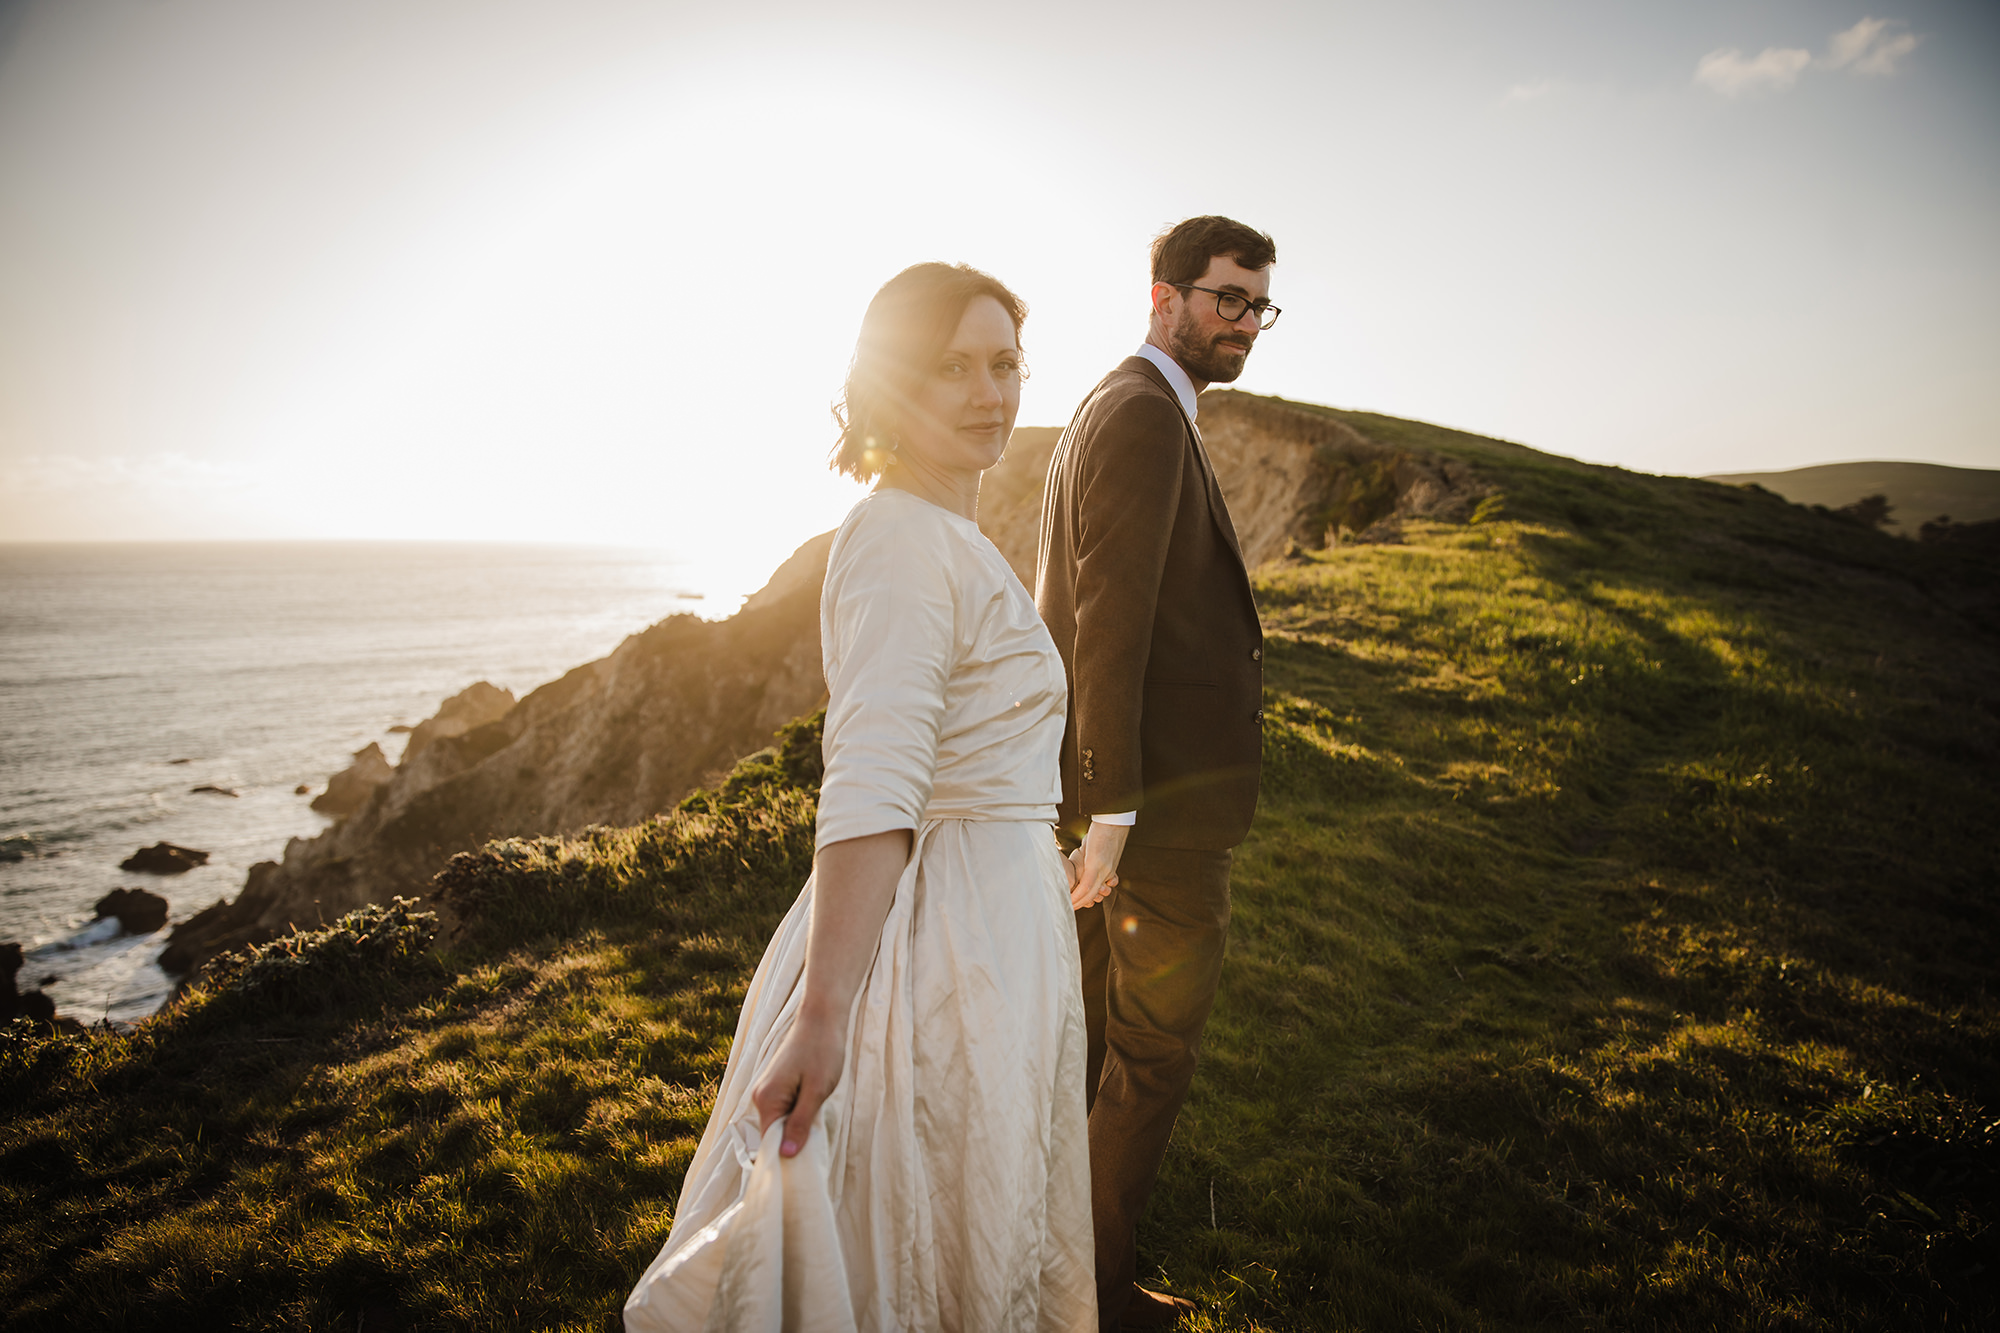 Walking through the hillside at sunset during their Point Reyes elopement.